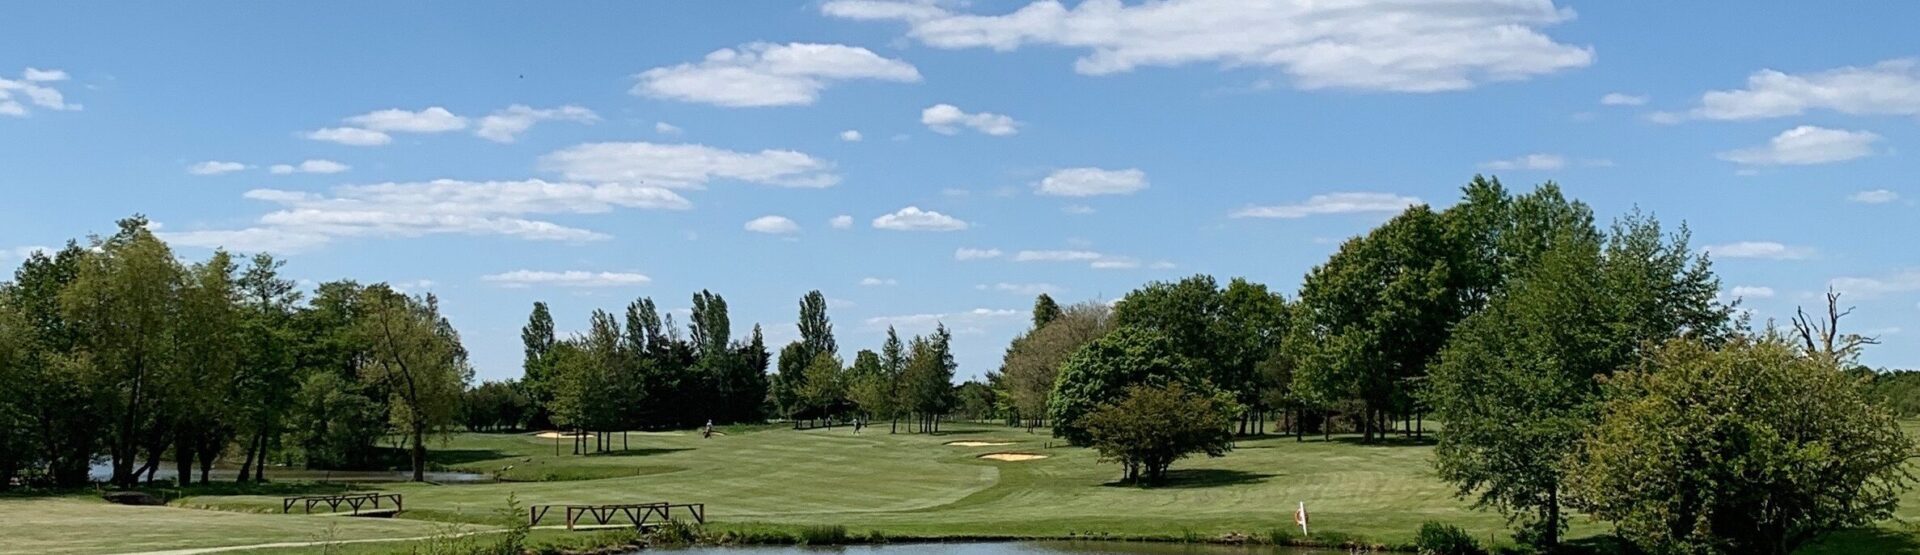 Golf course around lake